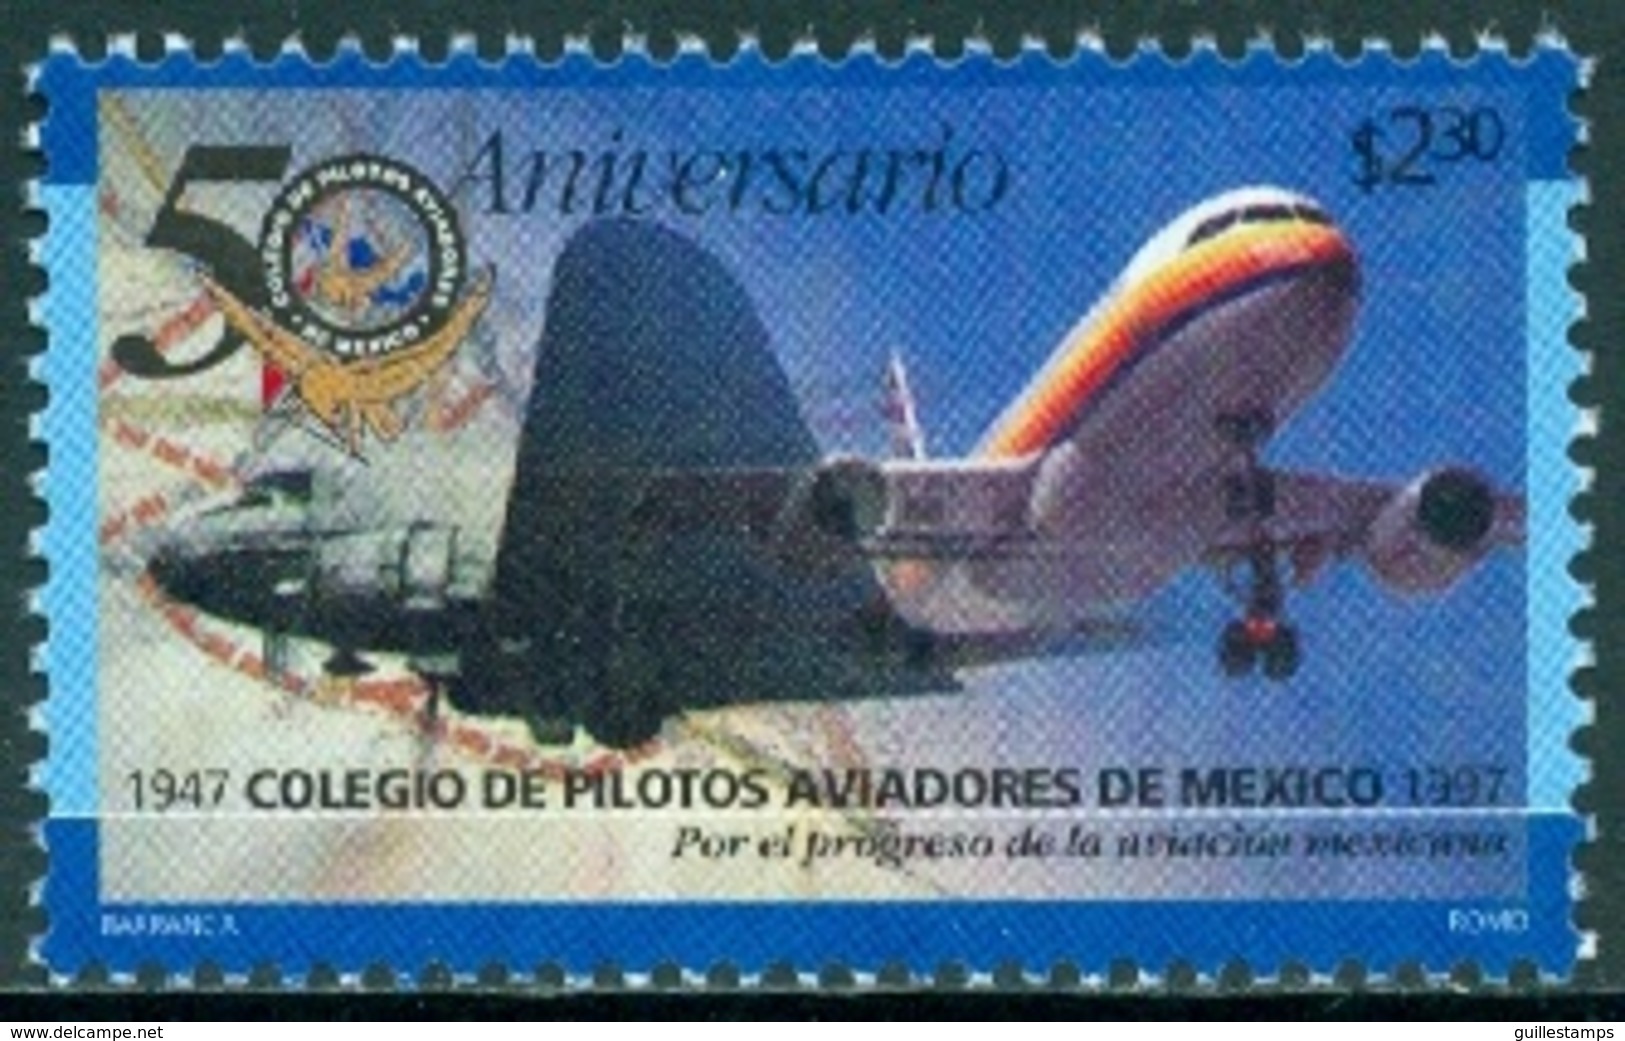 MEXICO 1997 AVIATION PILOTS SCHOOL, AIRCRAFT** (MNH) - México